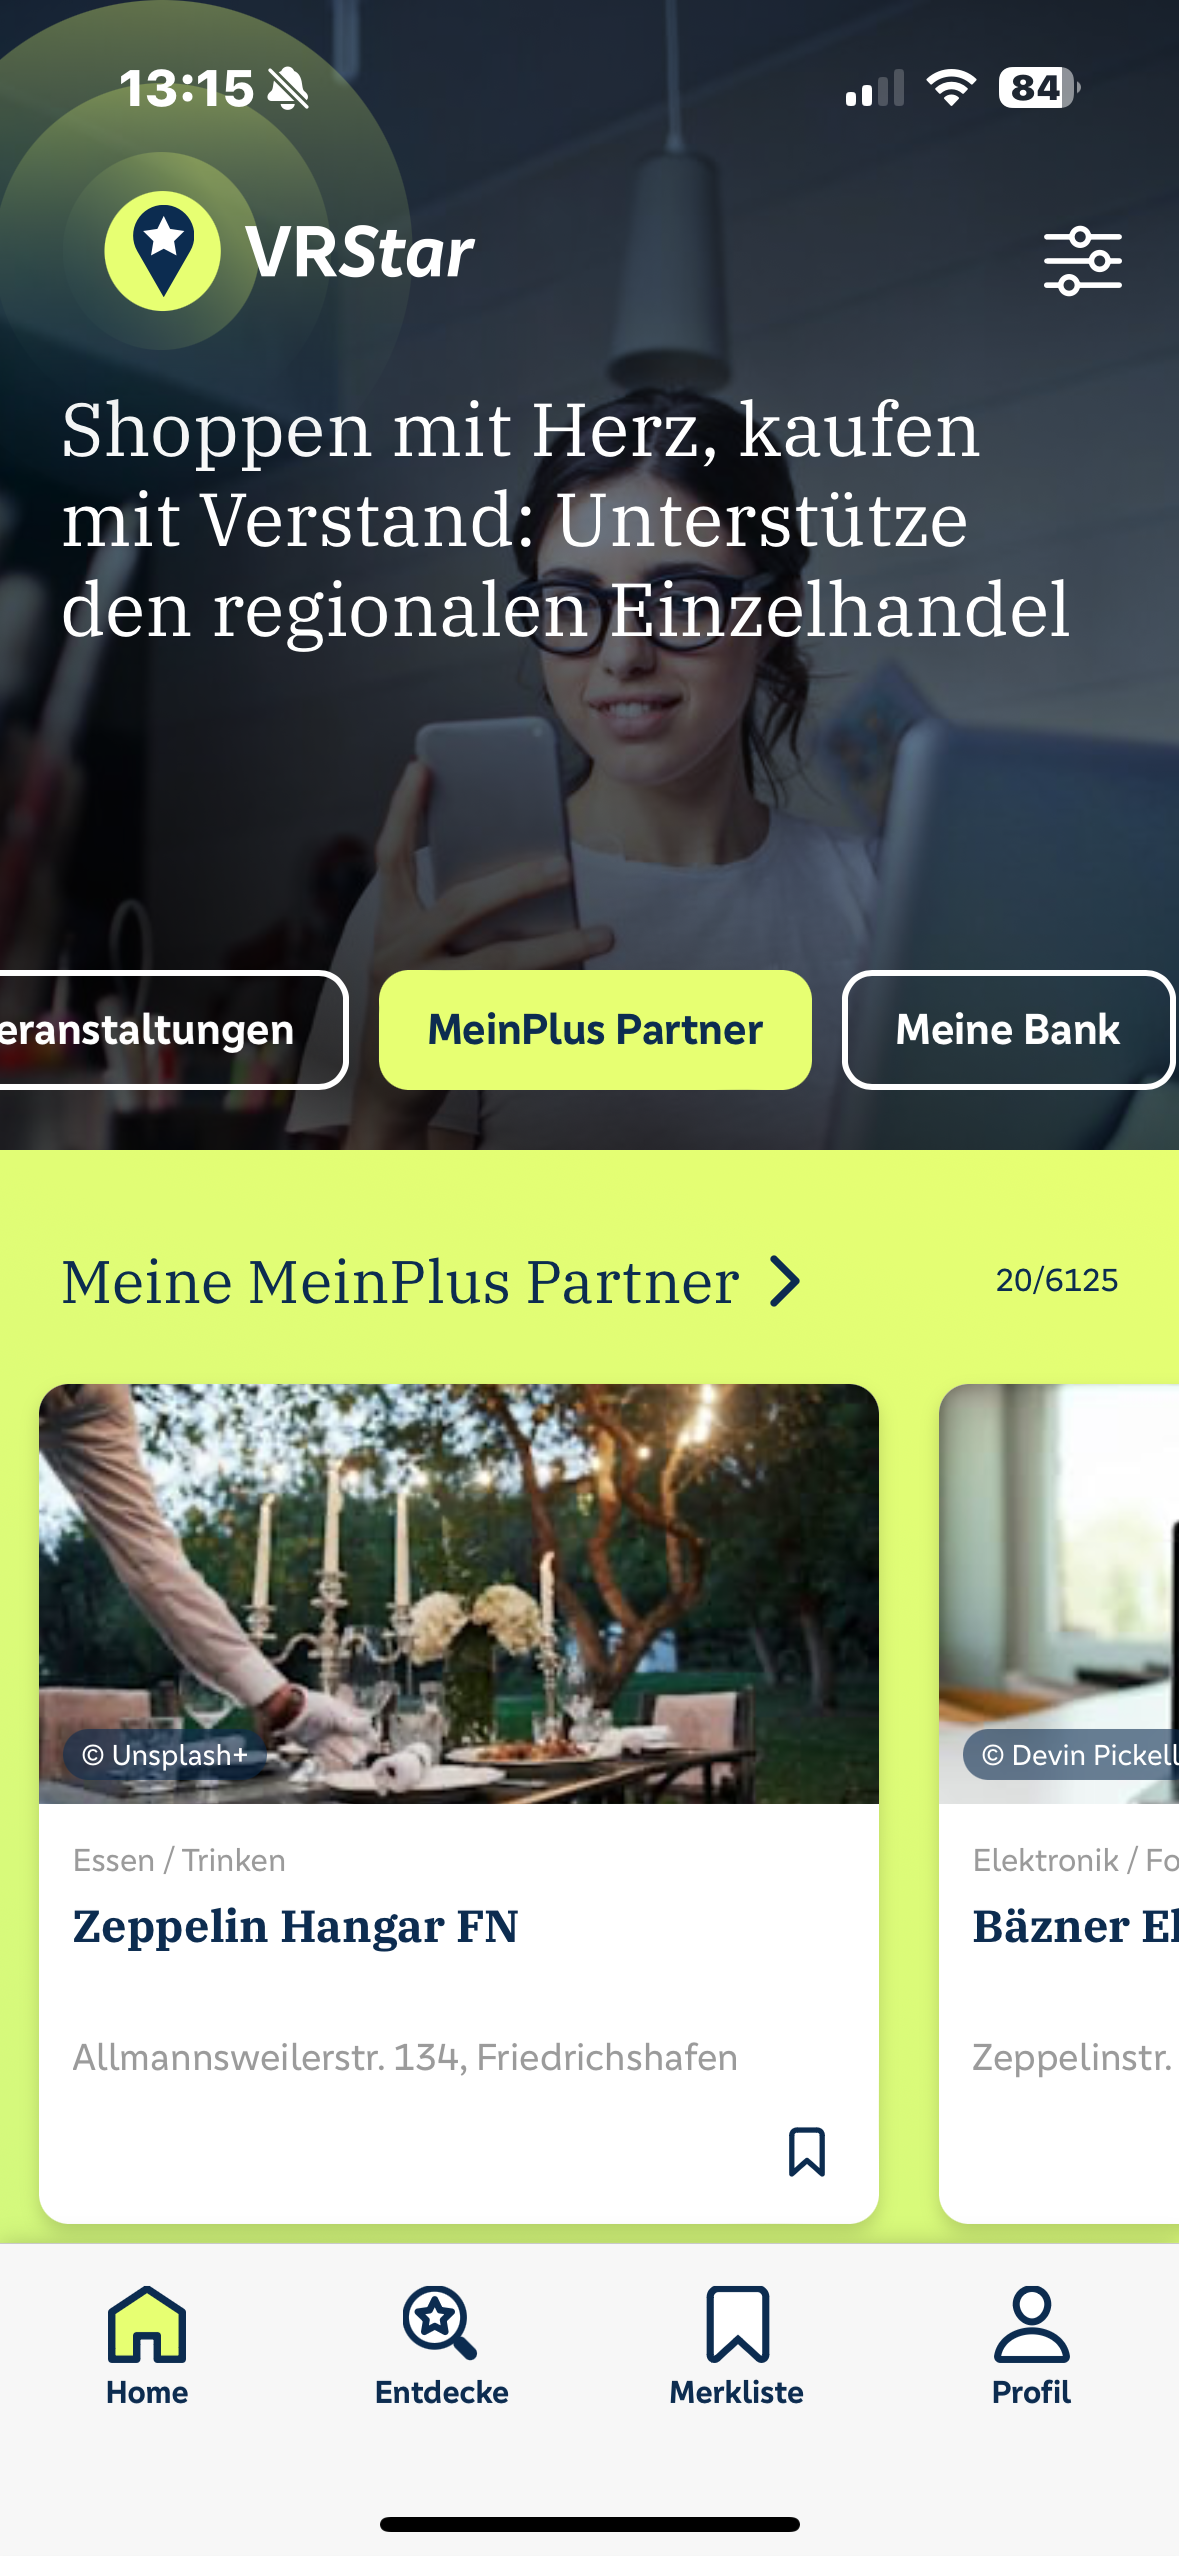 MeinPlus Partner